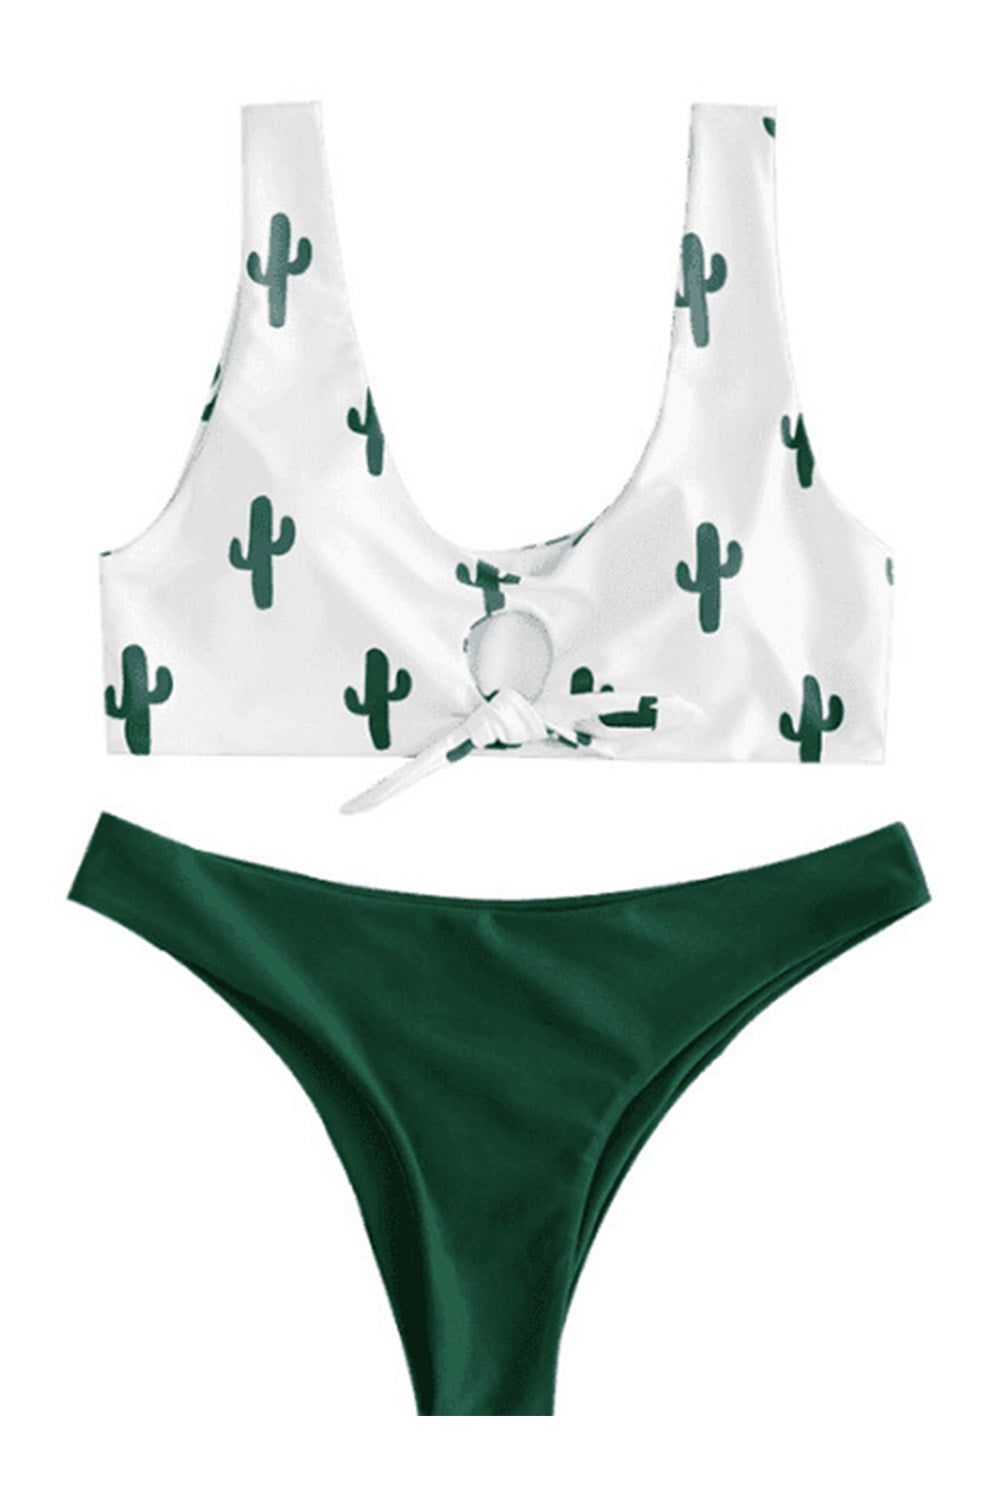 Iyasson Cactus Print Bikini with Bowknot